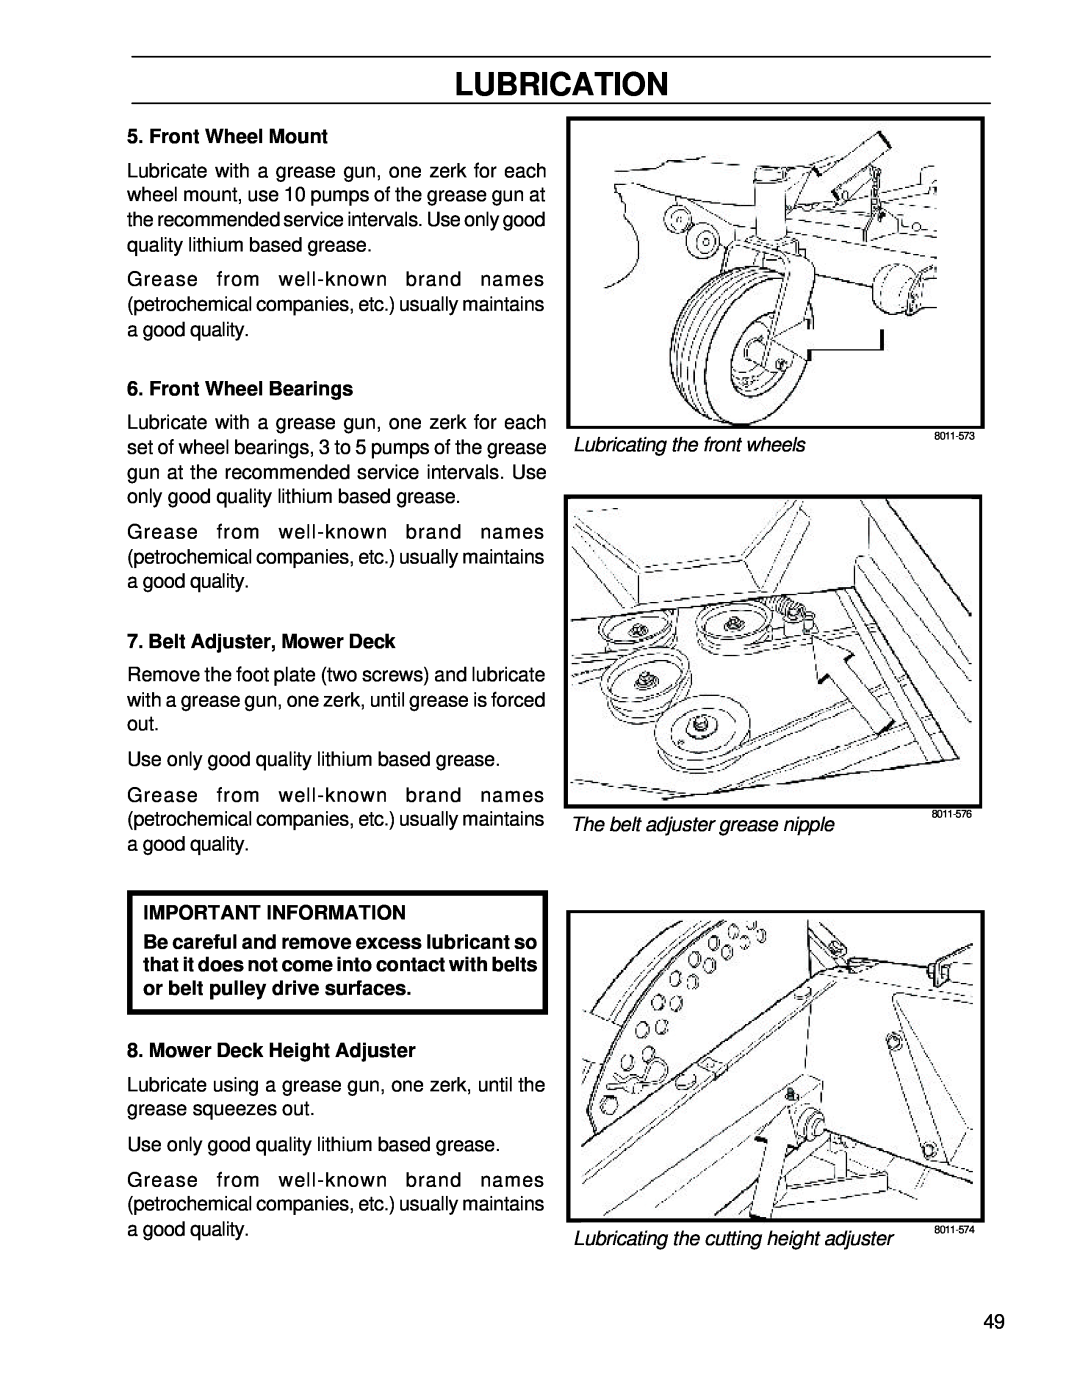 Husqvarna BZ6127TD/968999262 manual Front Wheel Mount, Front Wheel Bearings, Belt Adjuster, Mower Deck, Lubrication 